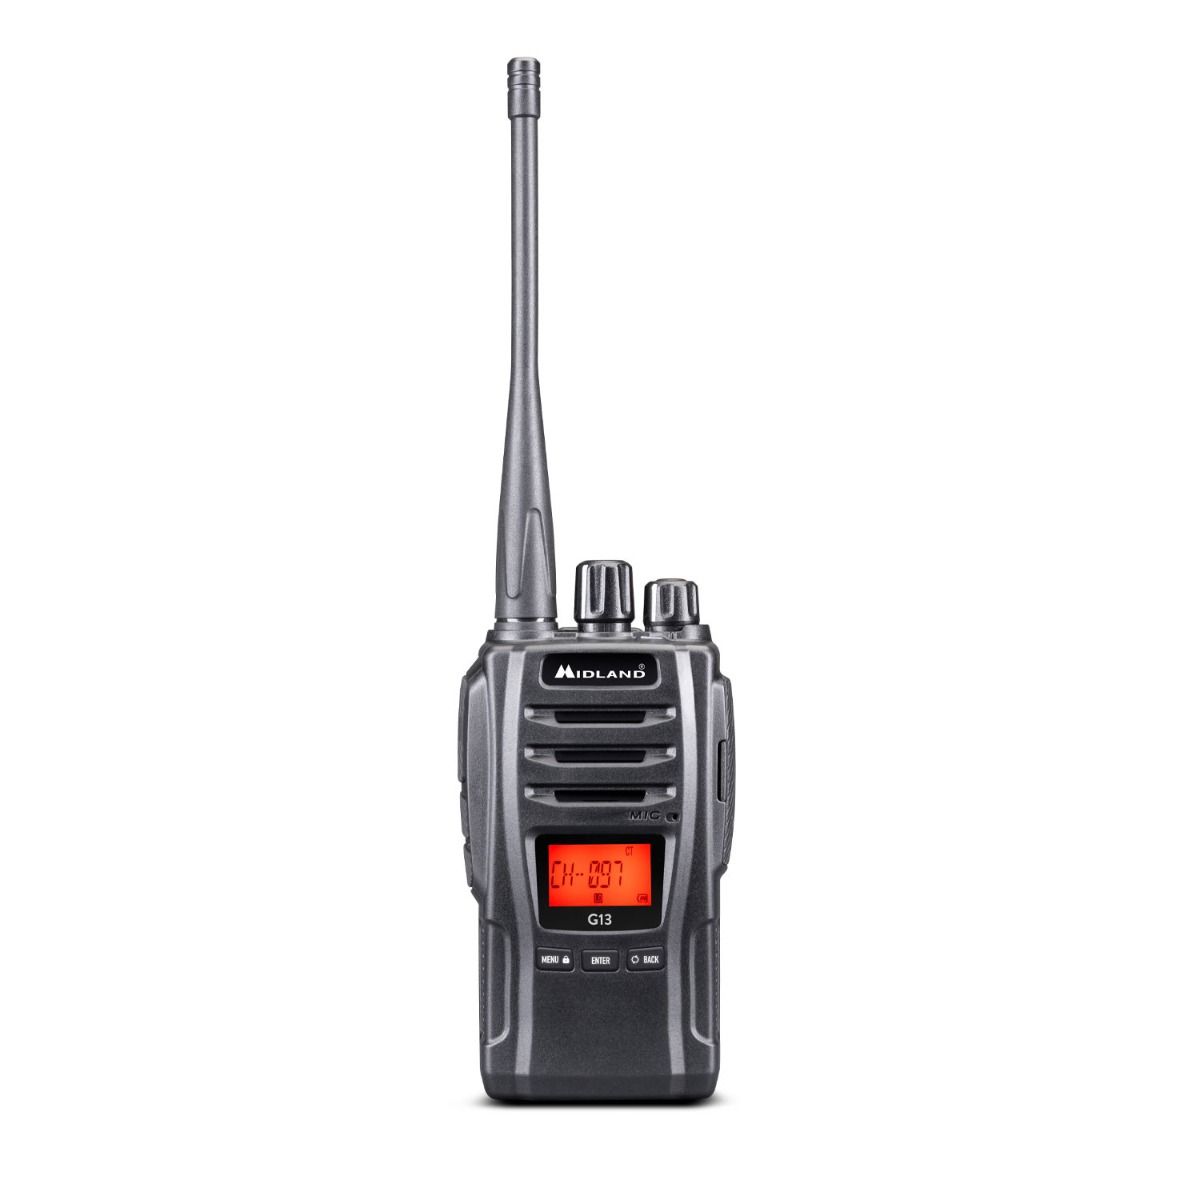 Stații radio CB și PMR - Stație radio PMR portabilă Midland G13 semi-profesională, fomcoshop.ro